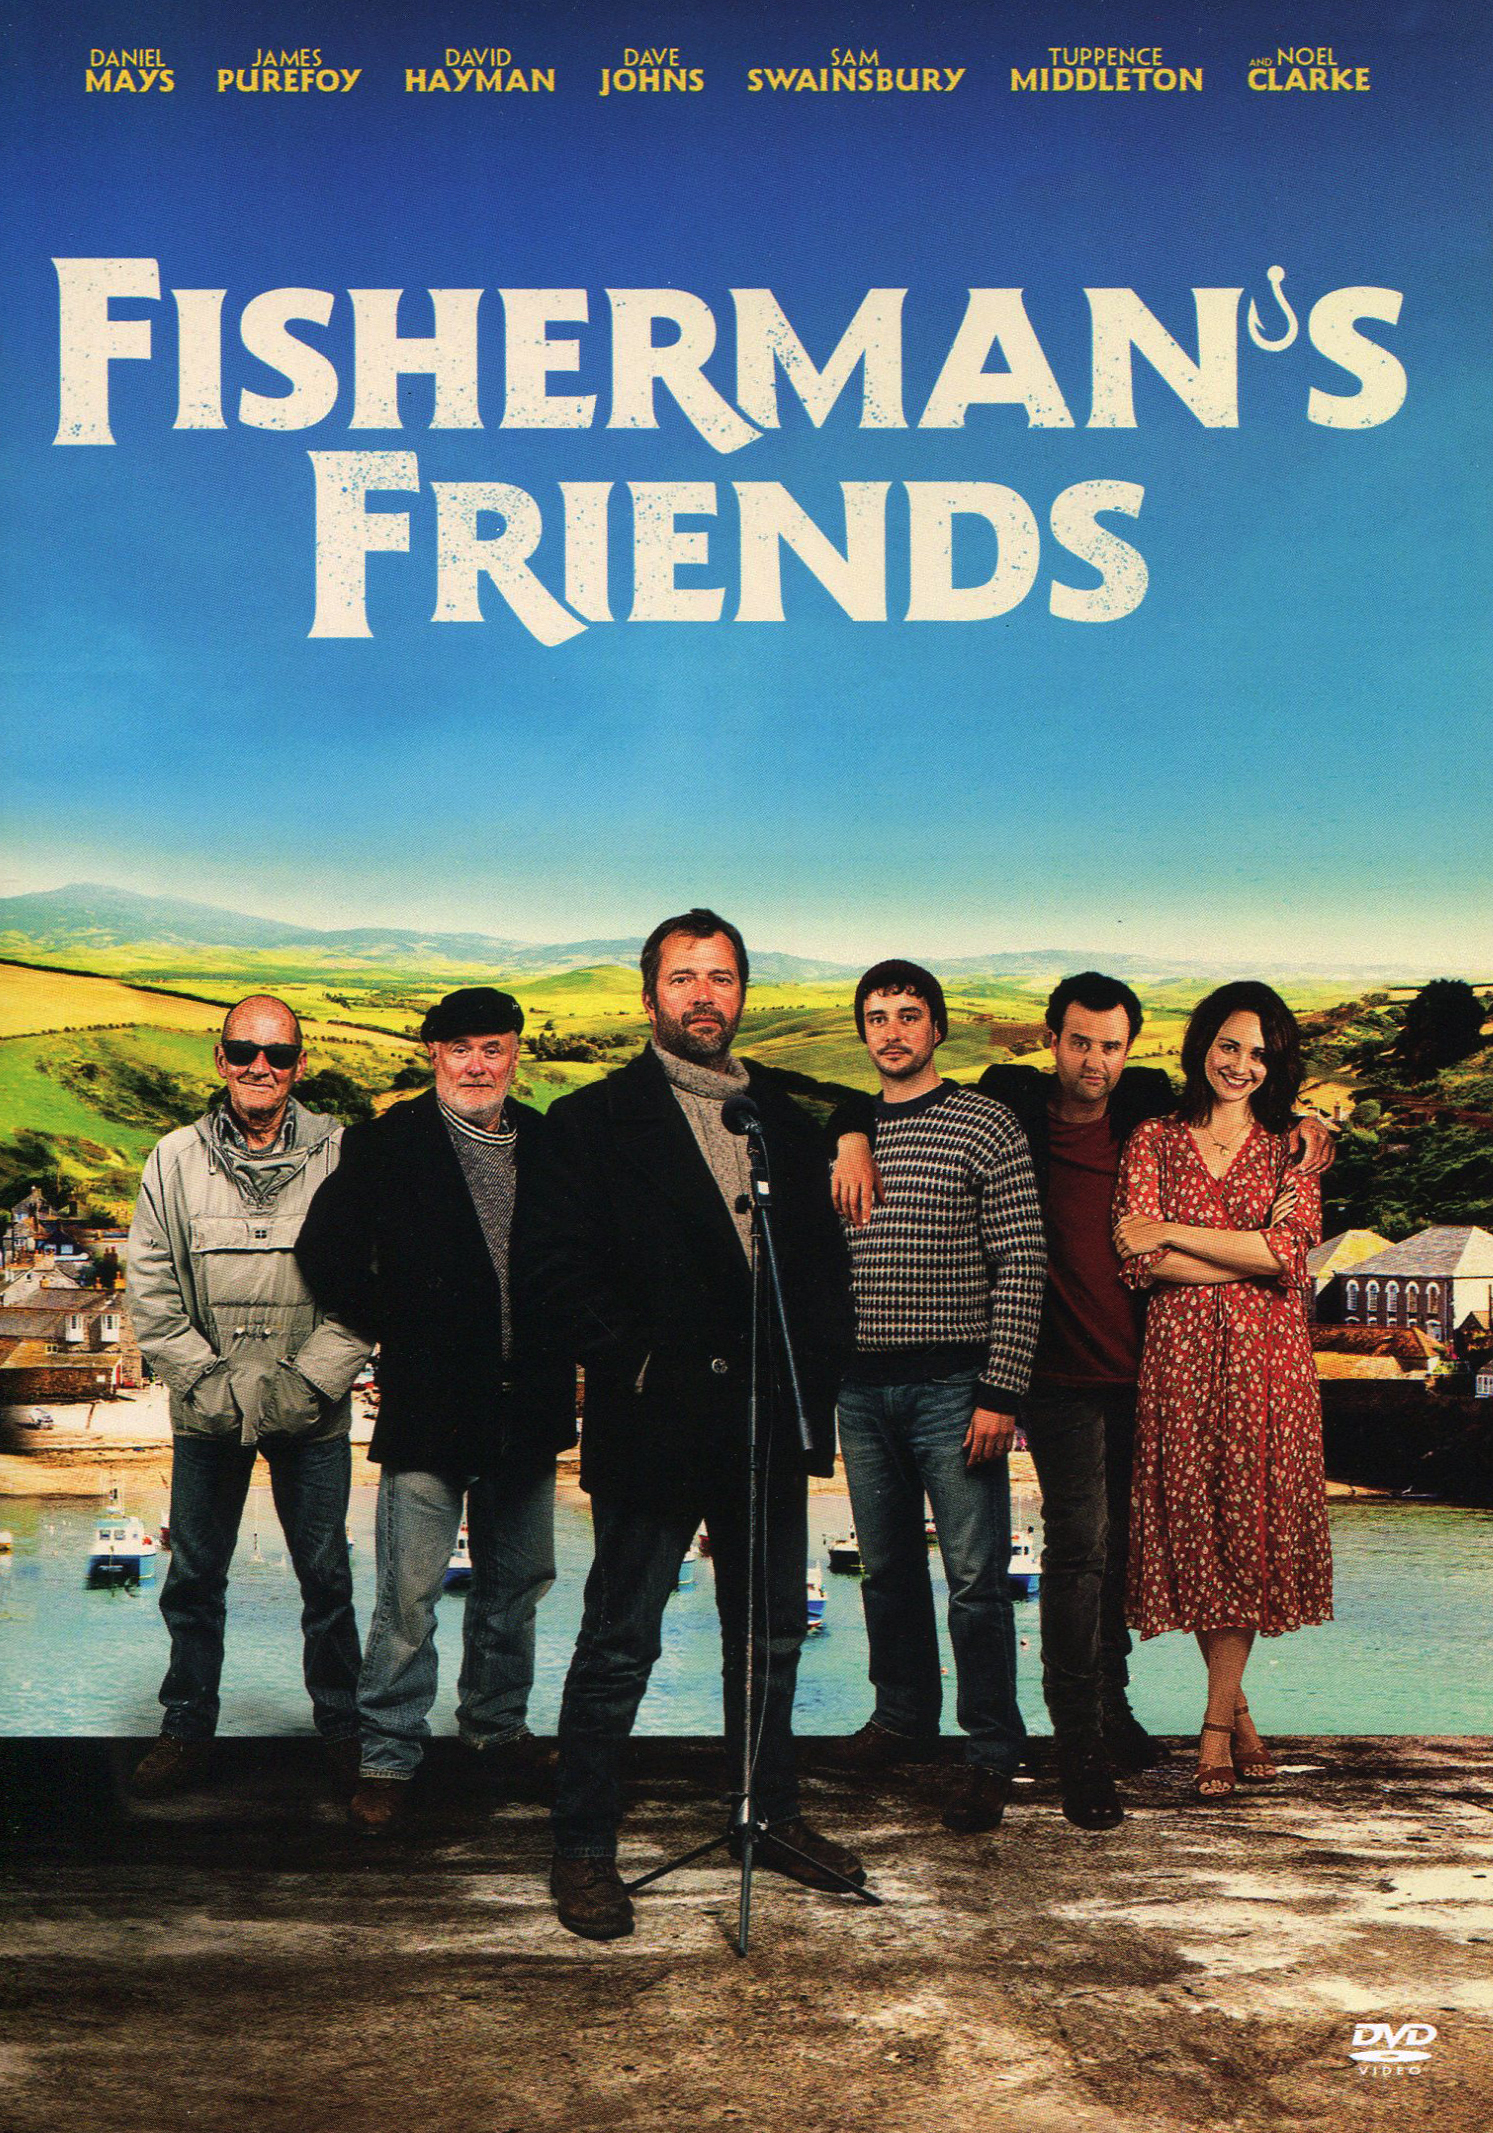 The Fisherman's Friends